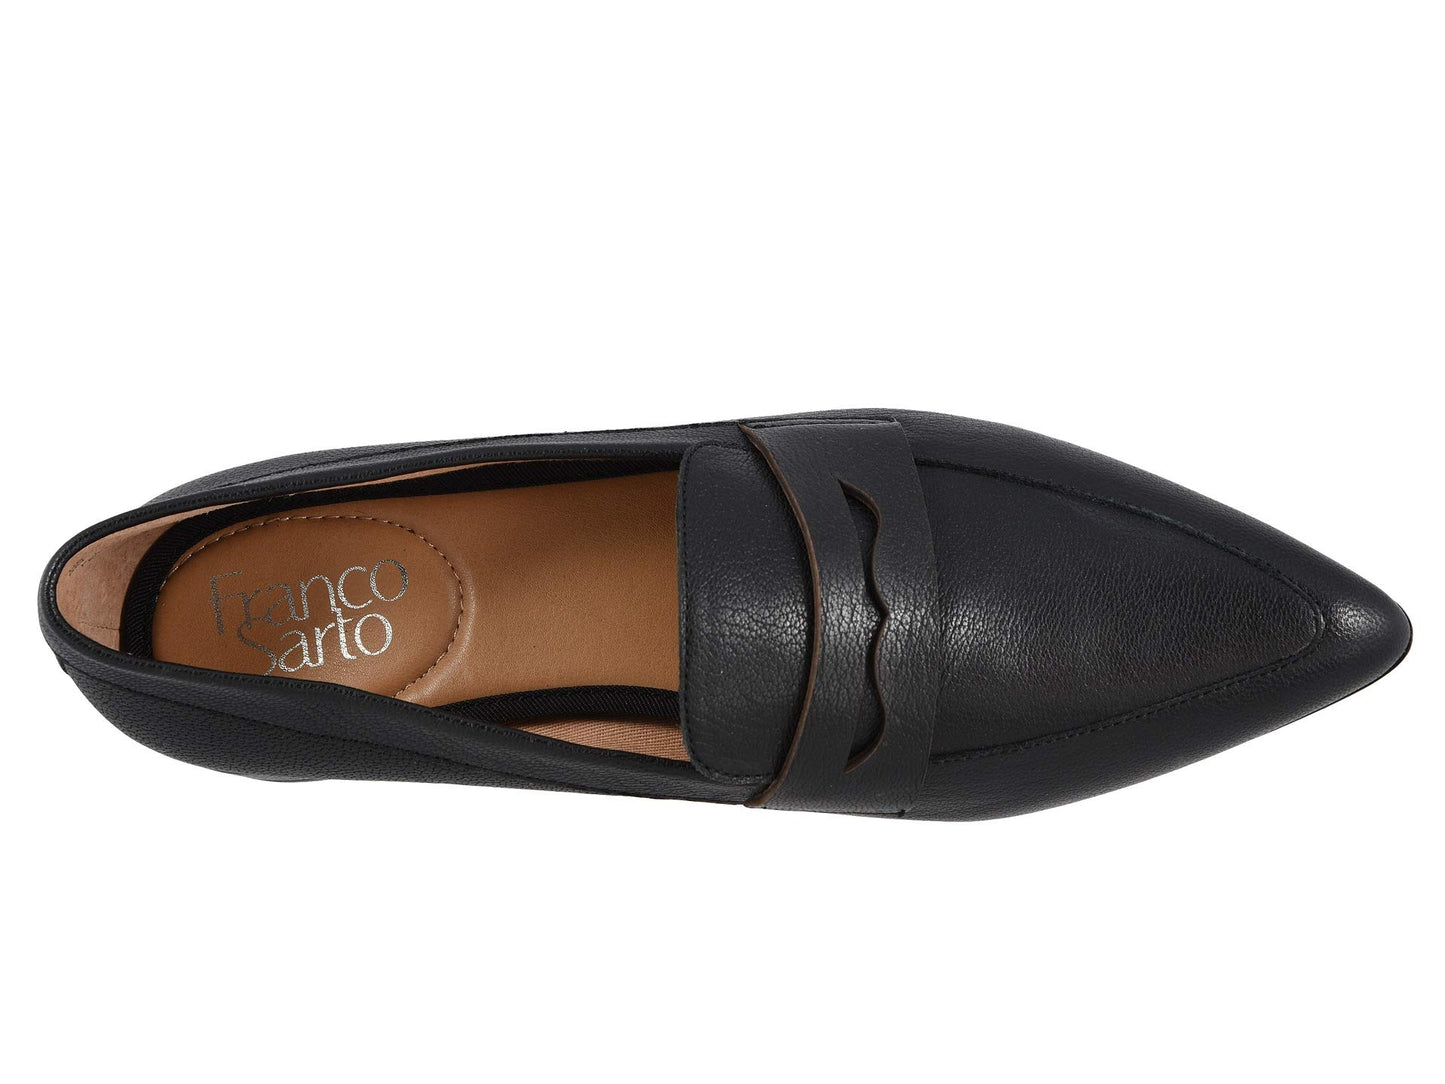 Zelda Black Leather Franco Sarto Loafers